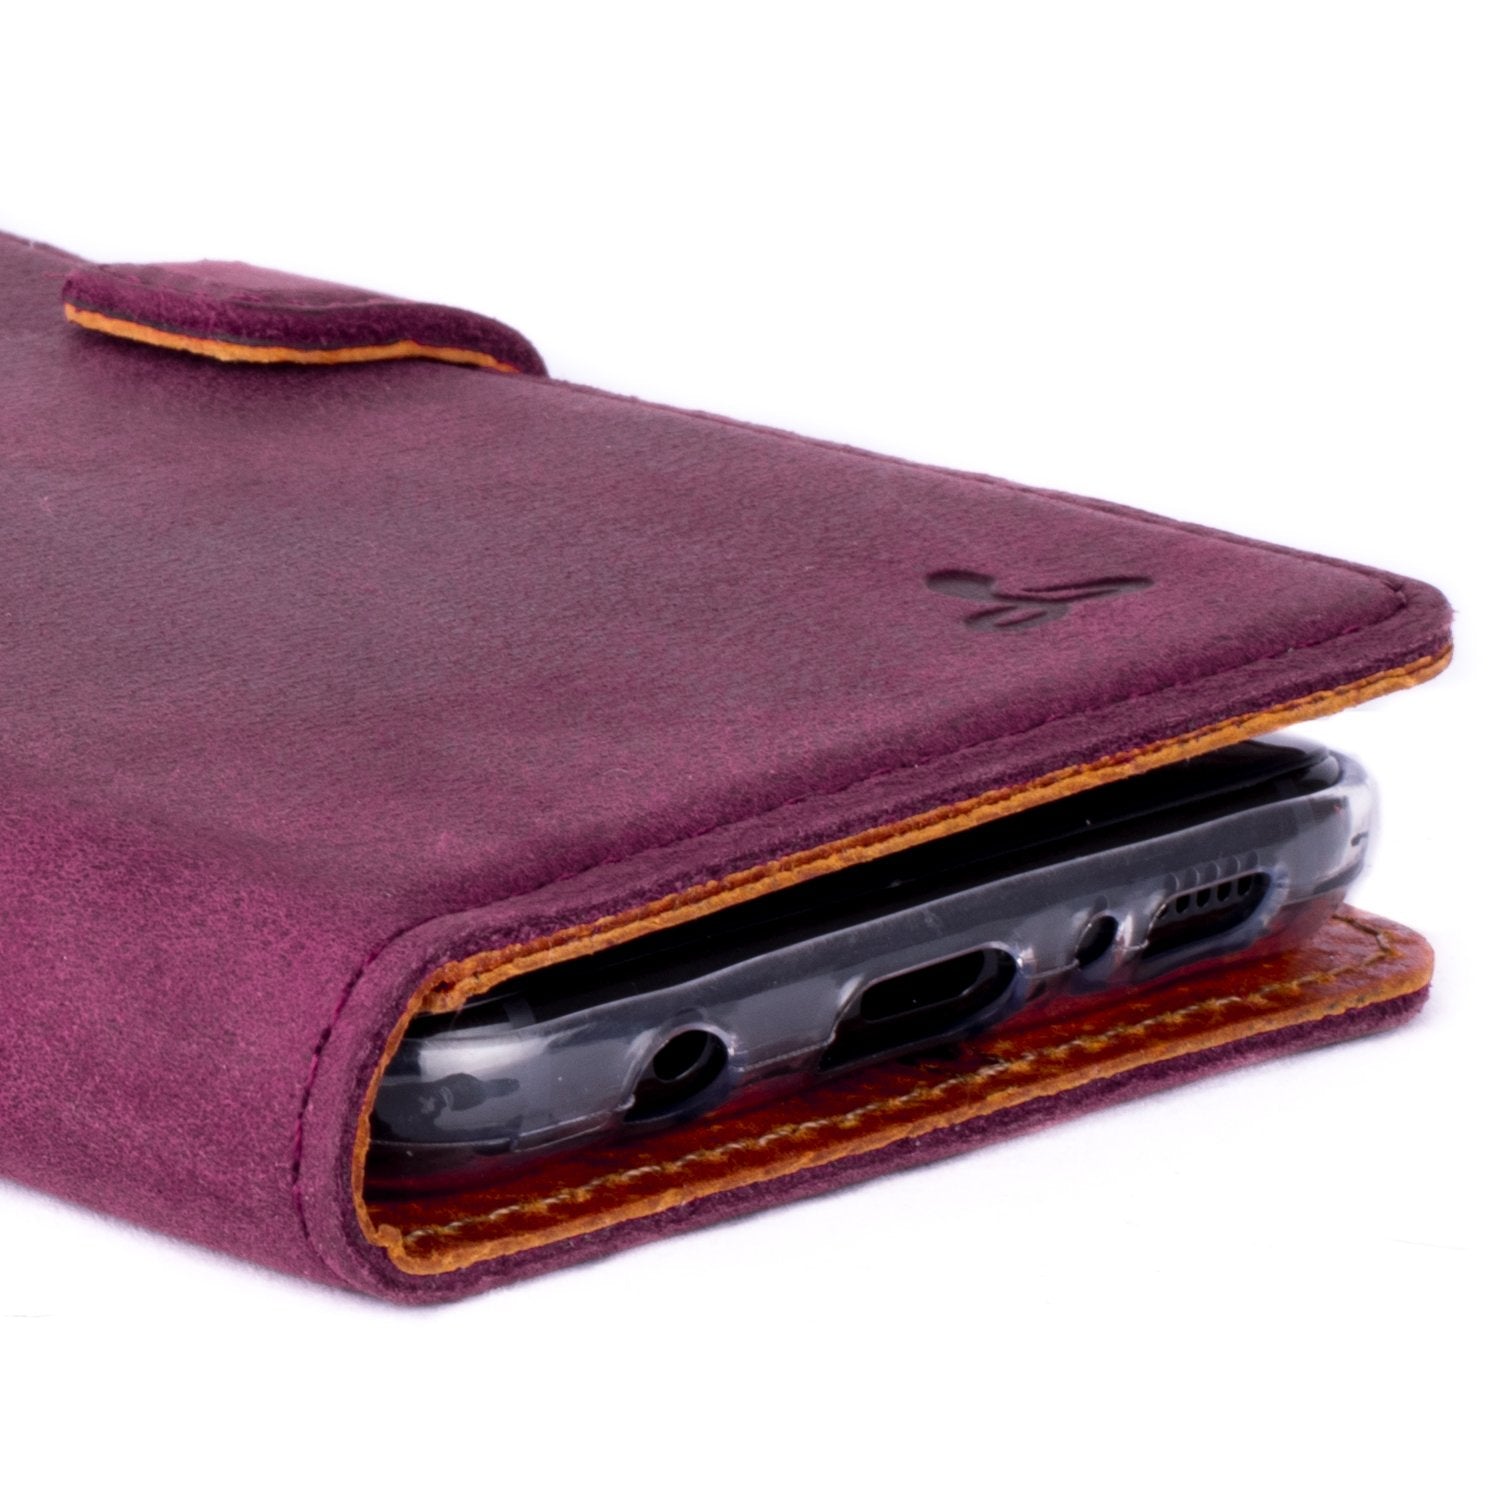 Vintage Leather Wallet - Samsung Galaxy S8 Plus